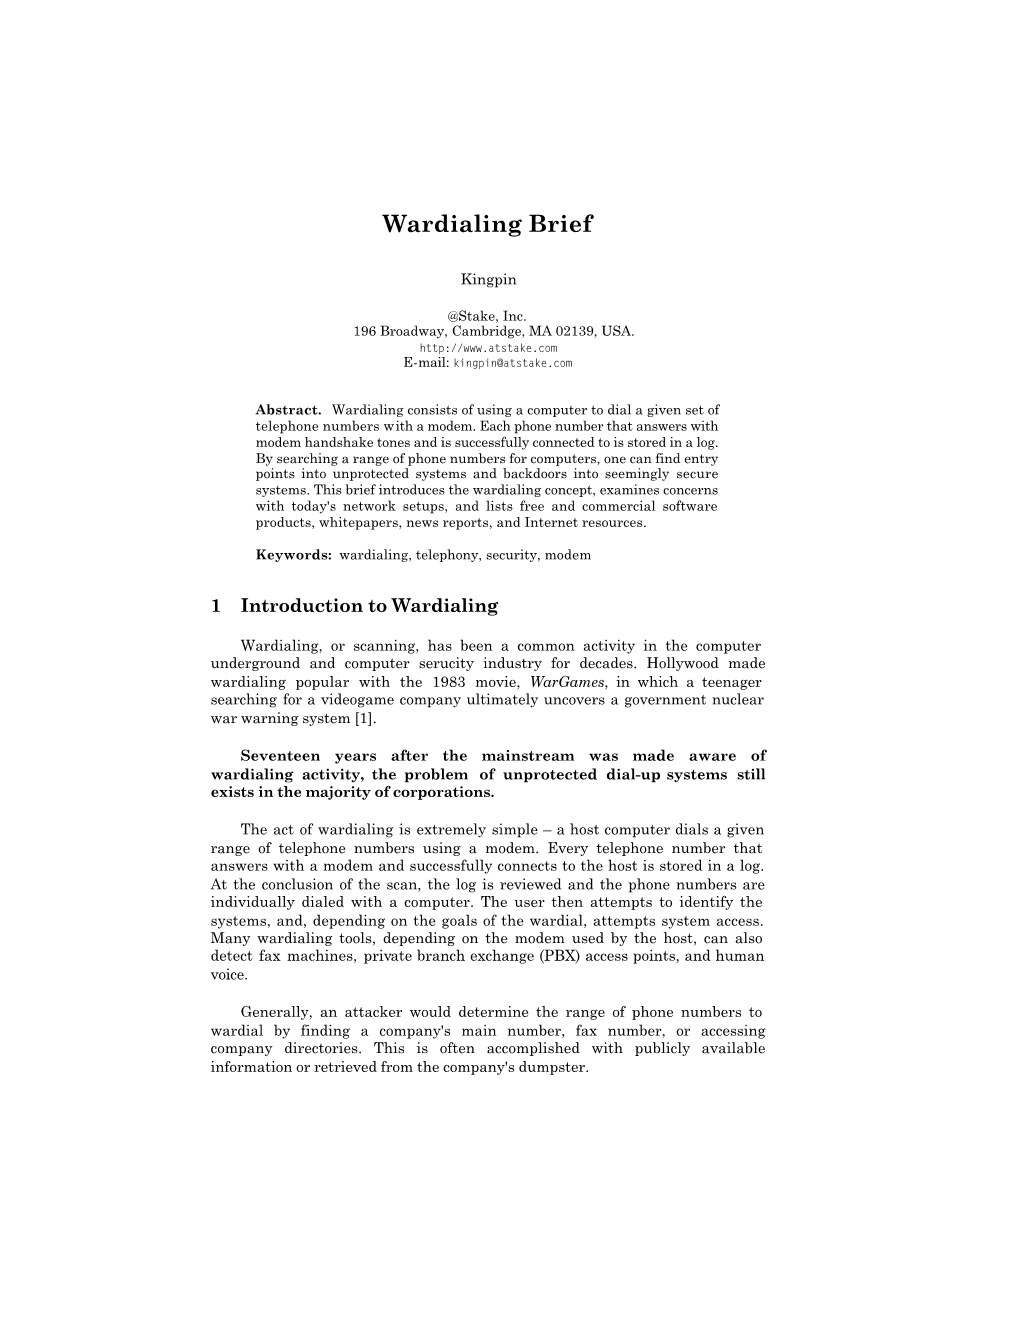 Paper: Wardialing Brief